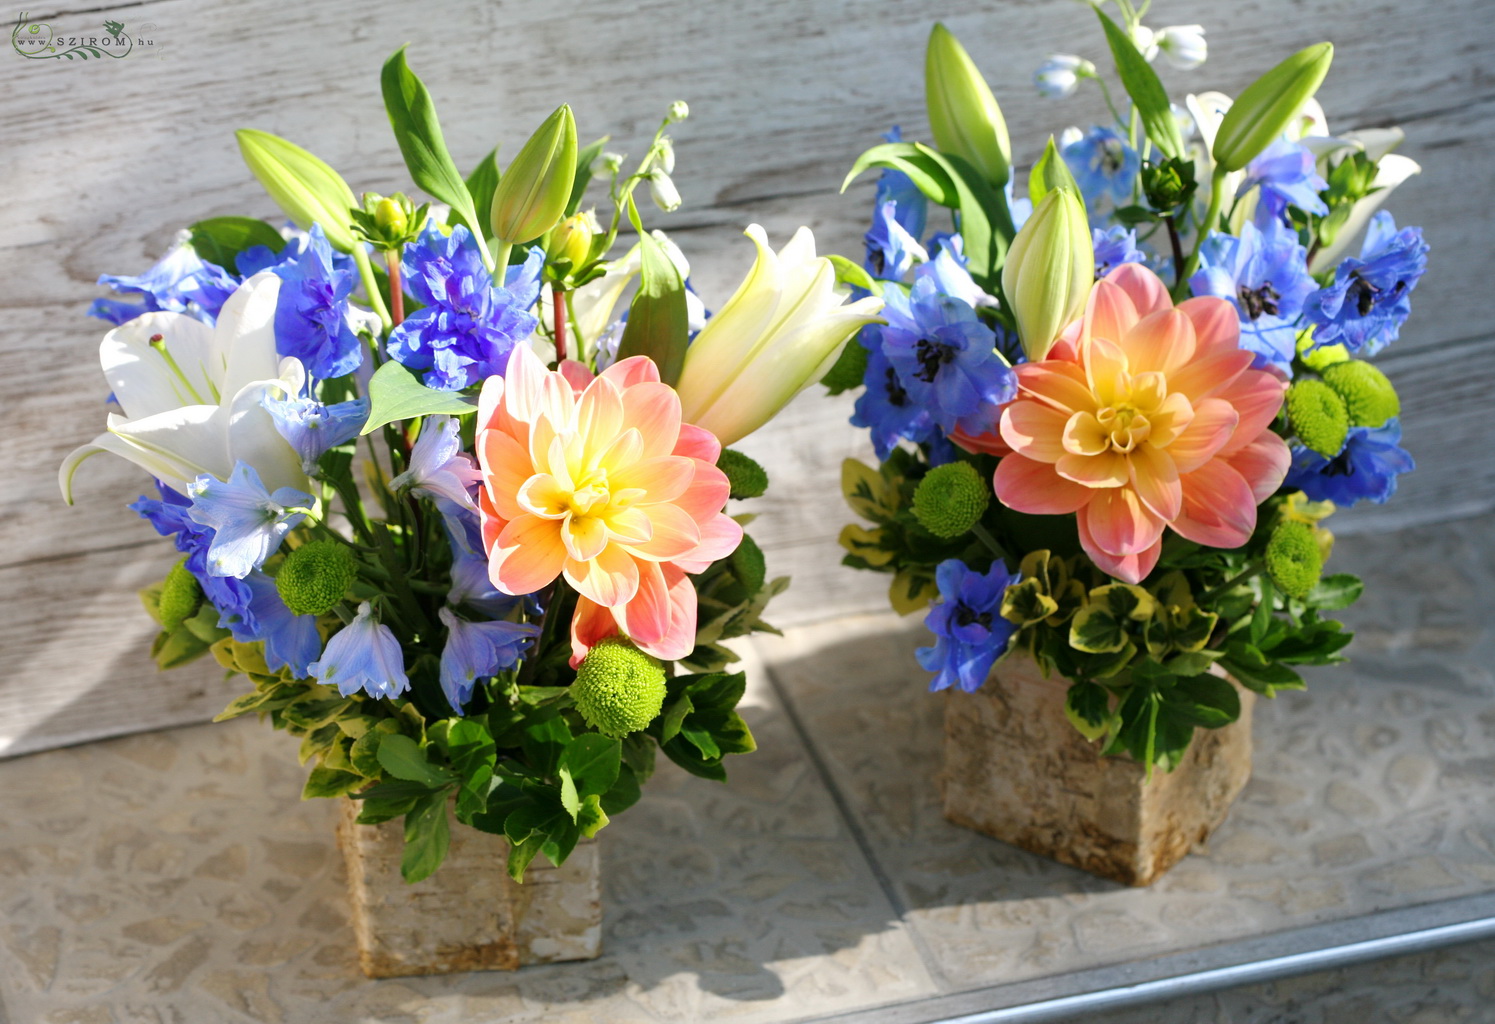 flower delivery Budapest - Centerpiece 1 pc (delphinium, lily, dali, blue, orange), wedding